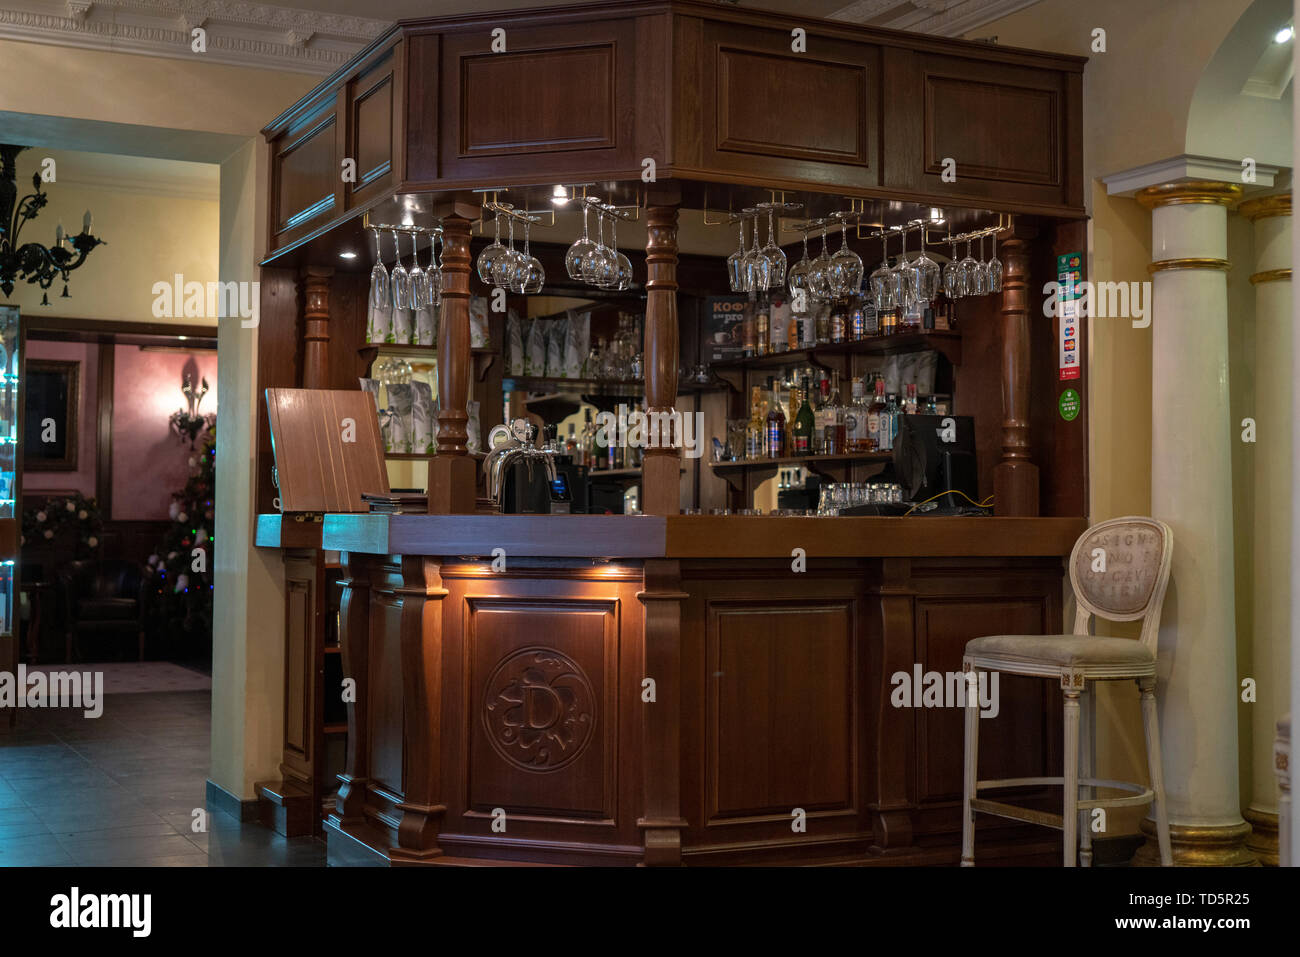 Minibar Interior Kitchen Concept Stock Photo - Download Image Now -  Kitchen, Mini Bar, Home Showcase Interior - iStock